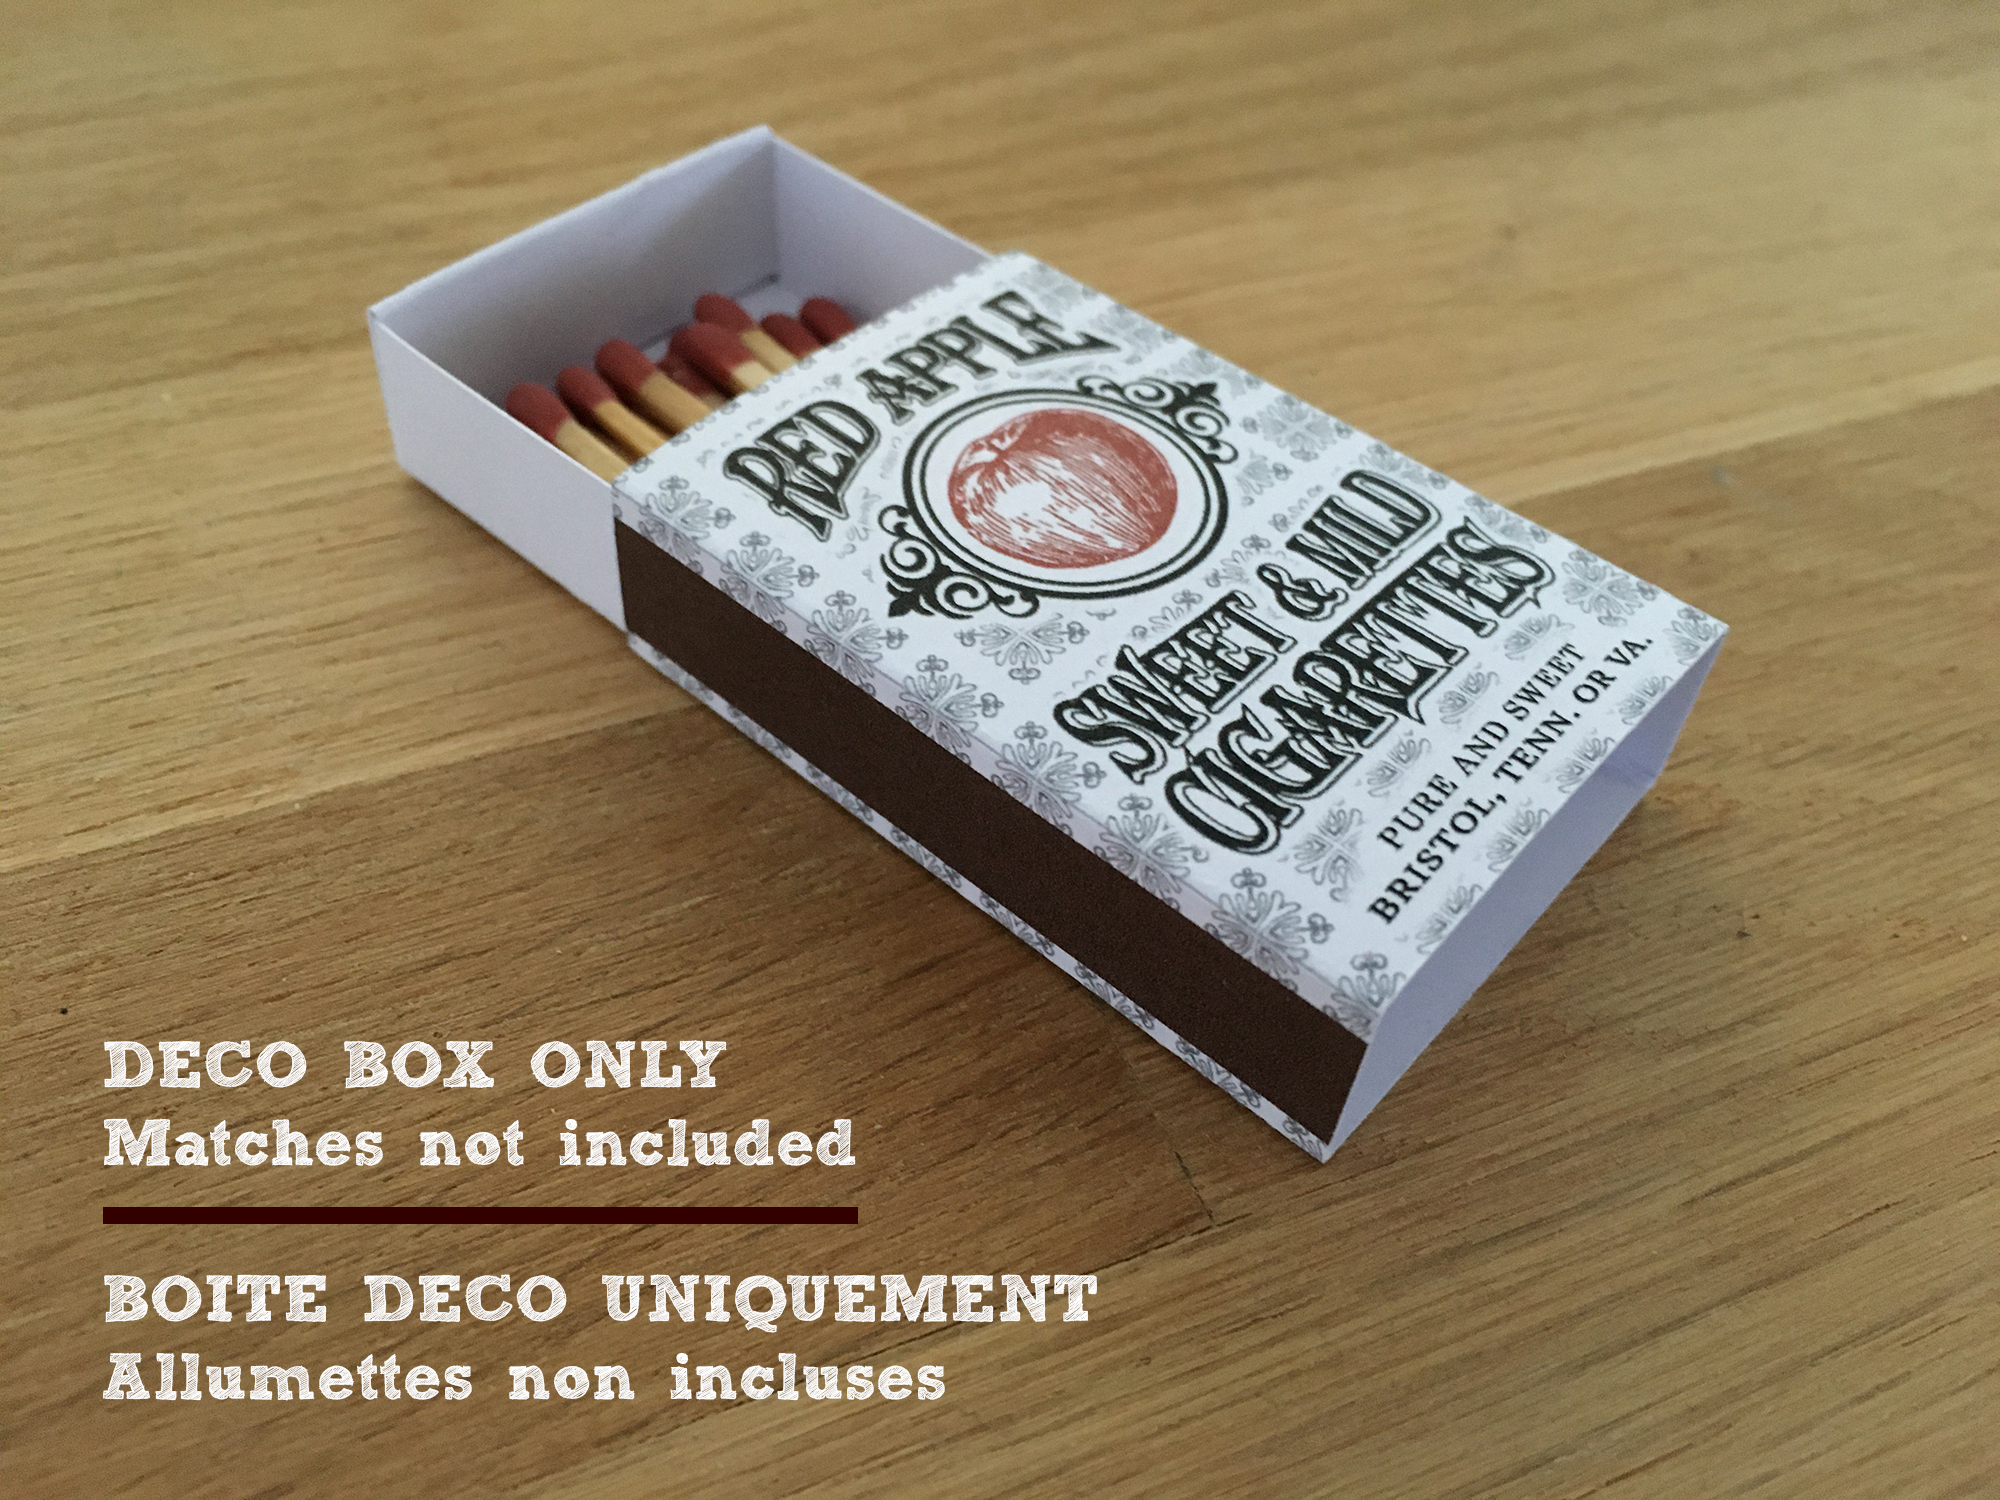 https://khristore.com/wp-content/uploads/2021/02/red-apple-sweet-mild-cigarettes-django-unchained-quentin-tarantino-matchbox-matches-box-boite-allumettes-movie-prop-movie-props-khristore-8.jpg